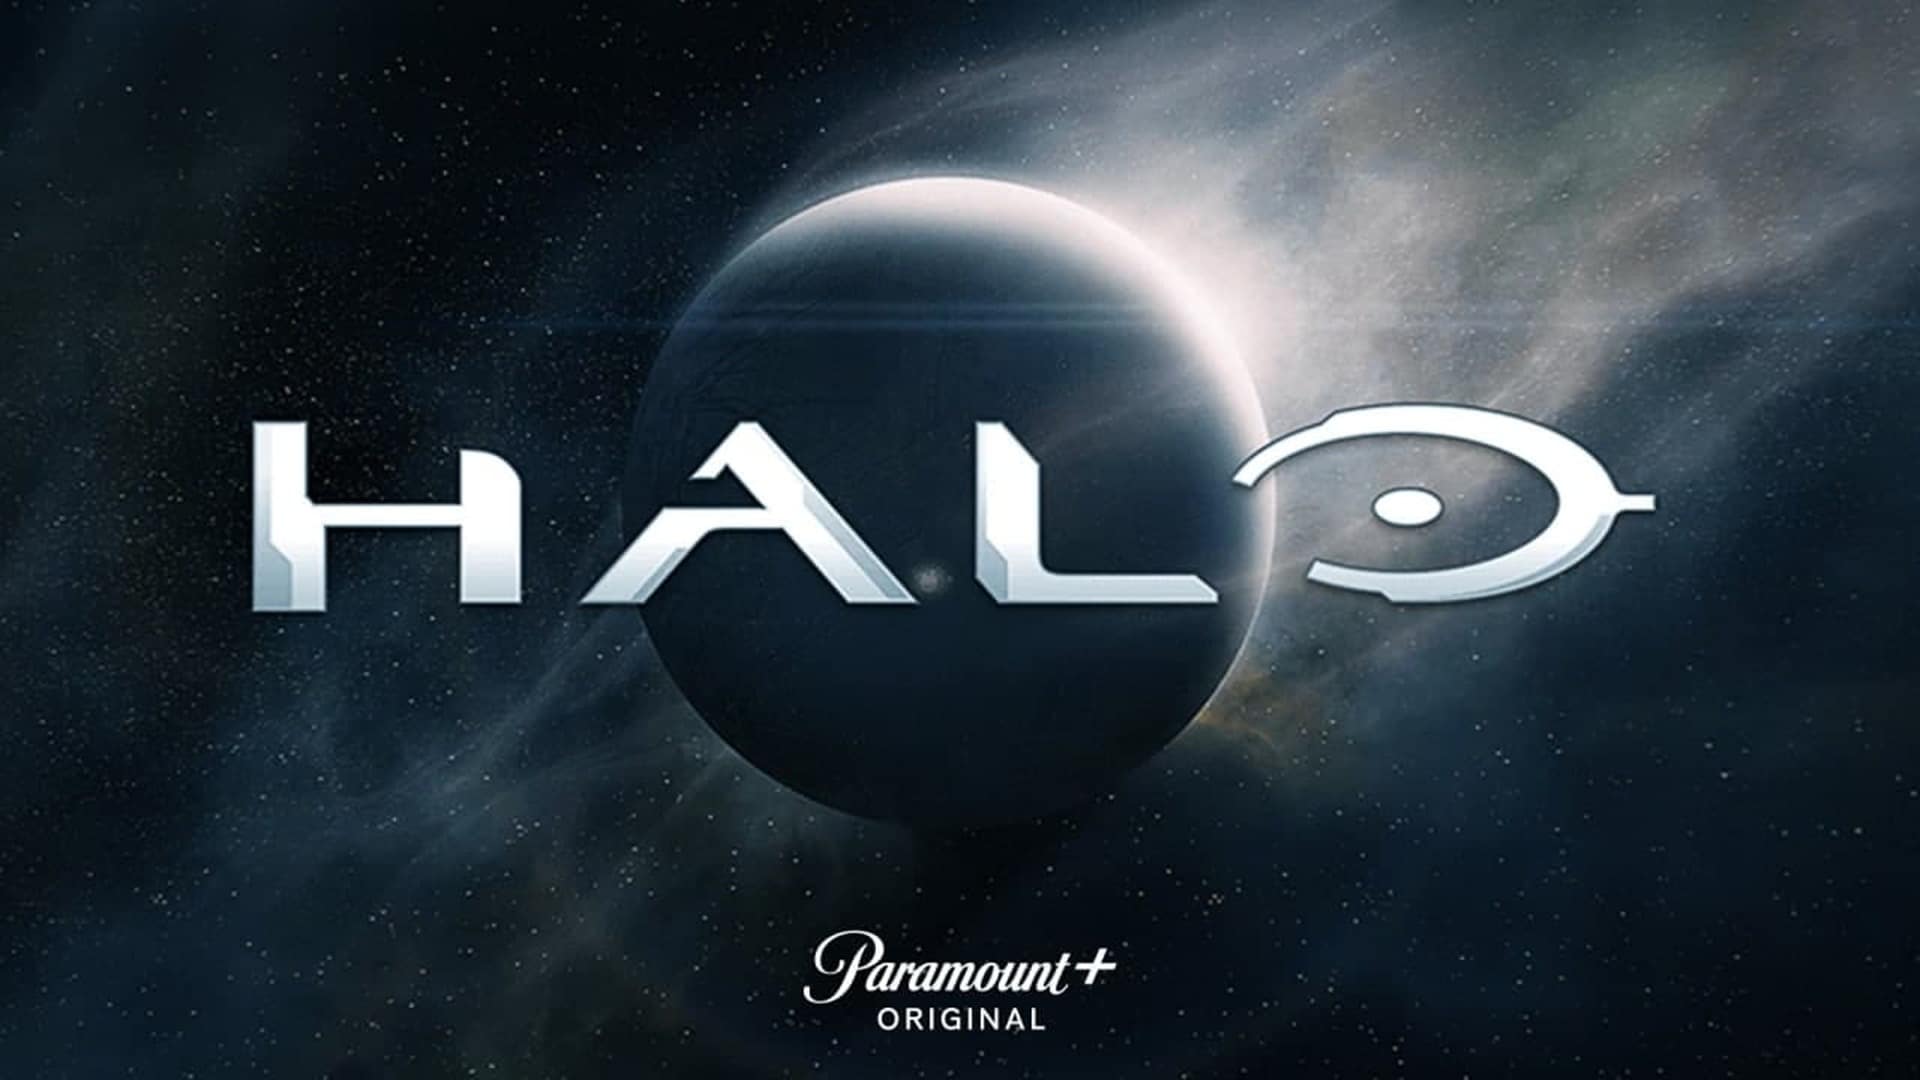 La serie de televisión Halo finalmente revela su primer tráiler en The Game Awards, GamersRD